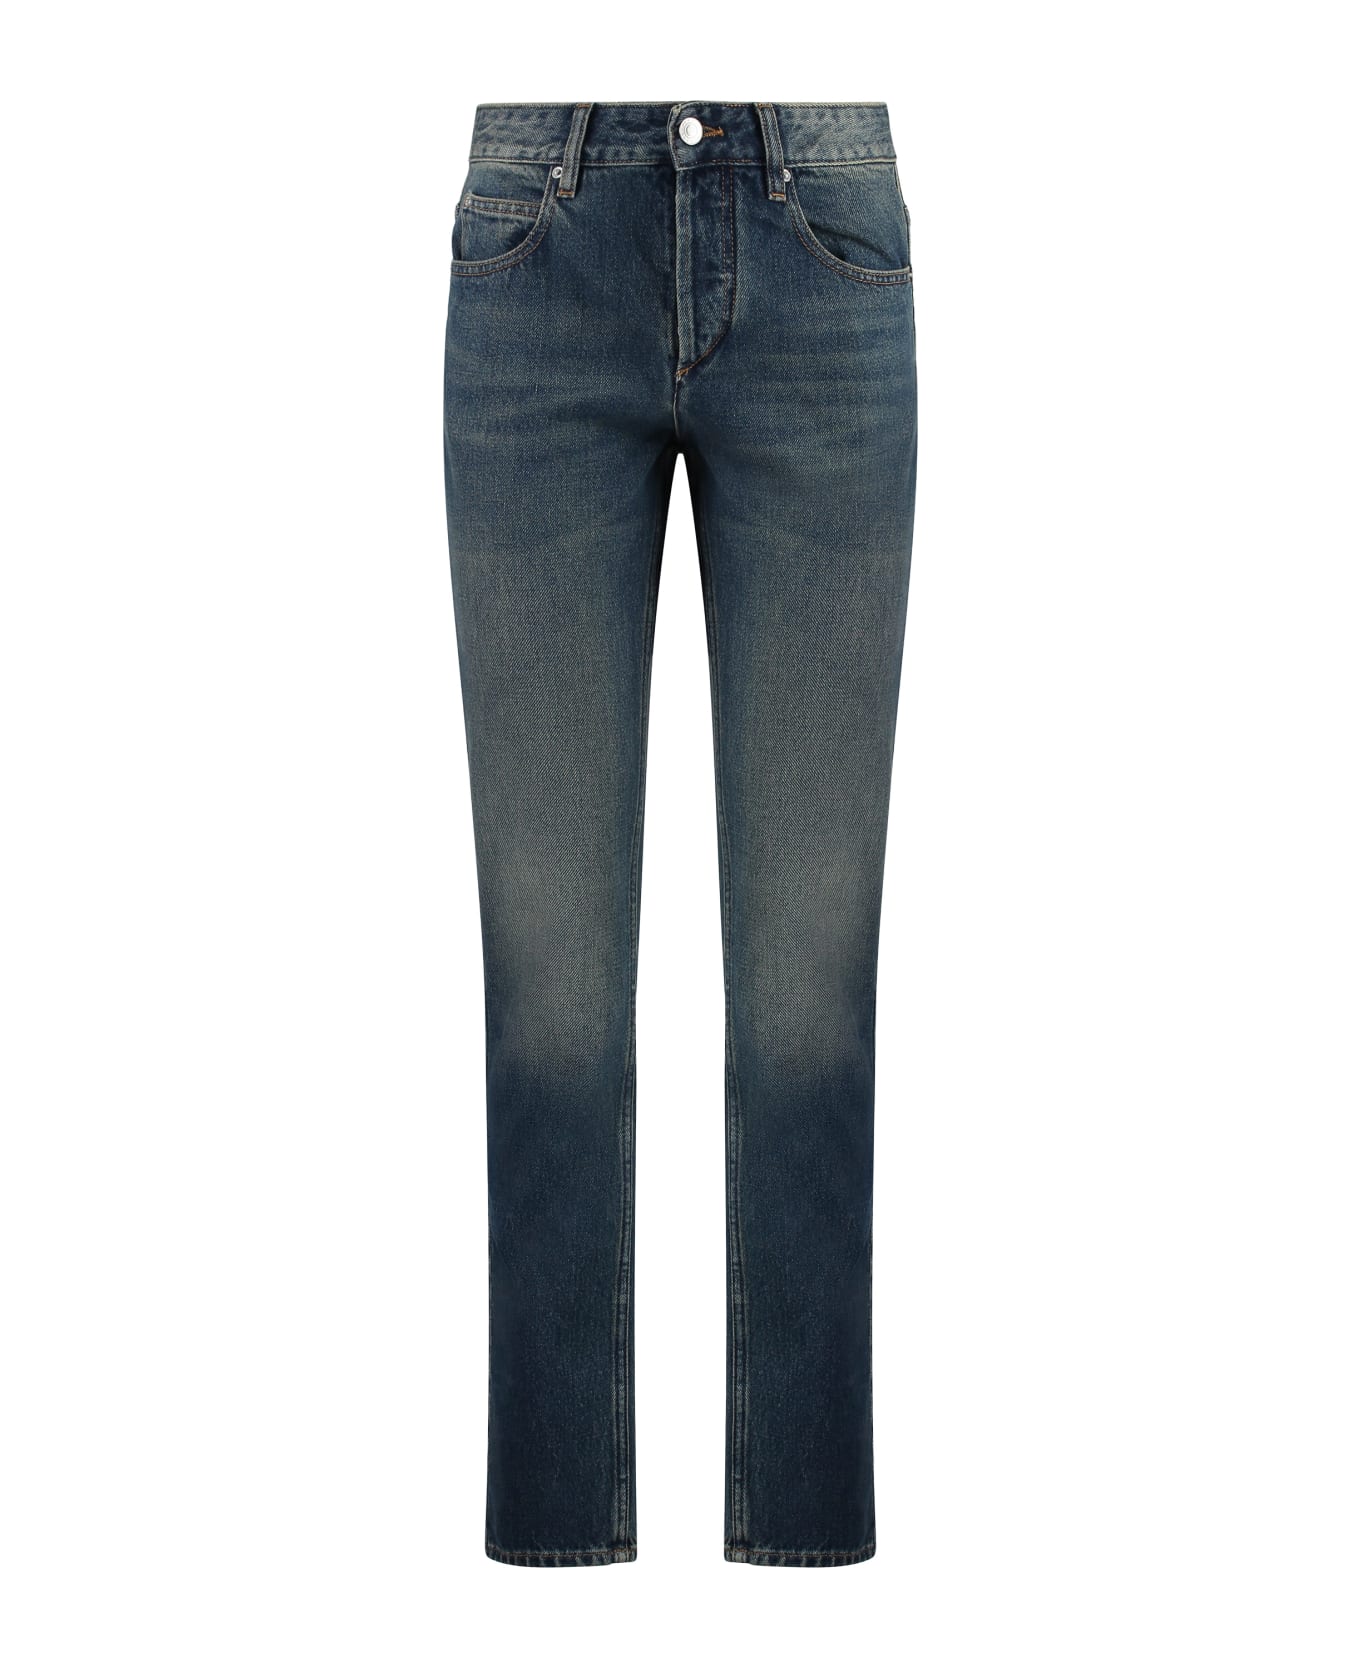 Isabel Marant Jiliana Stretch Cotton Jeans - Denim